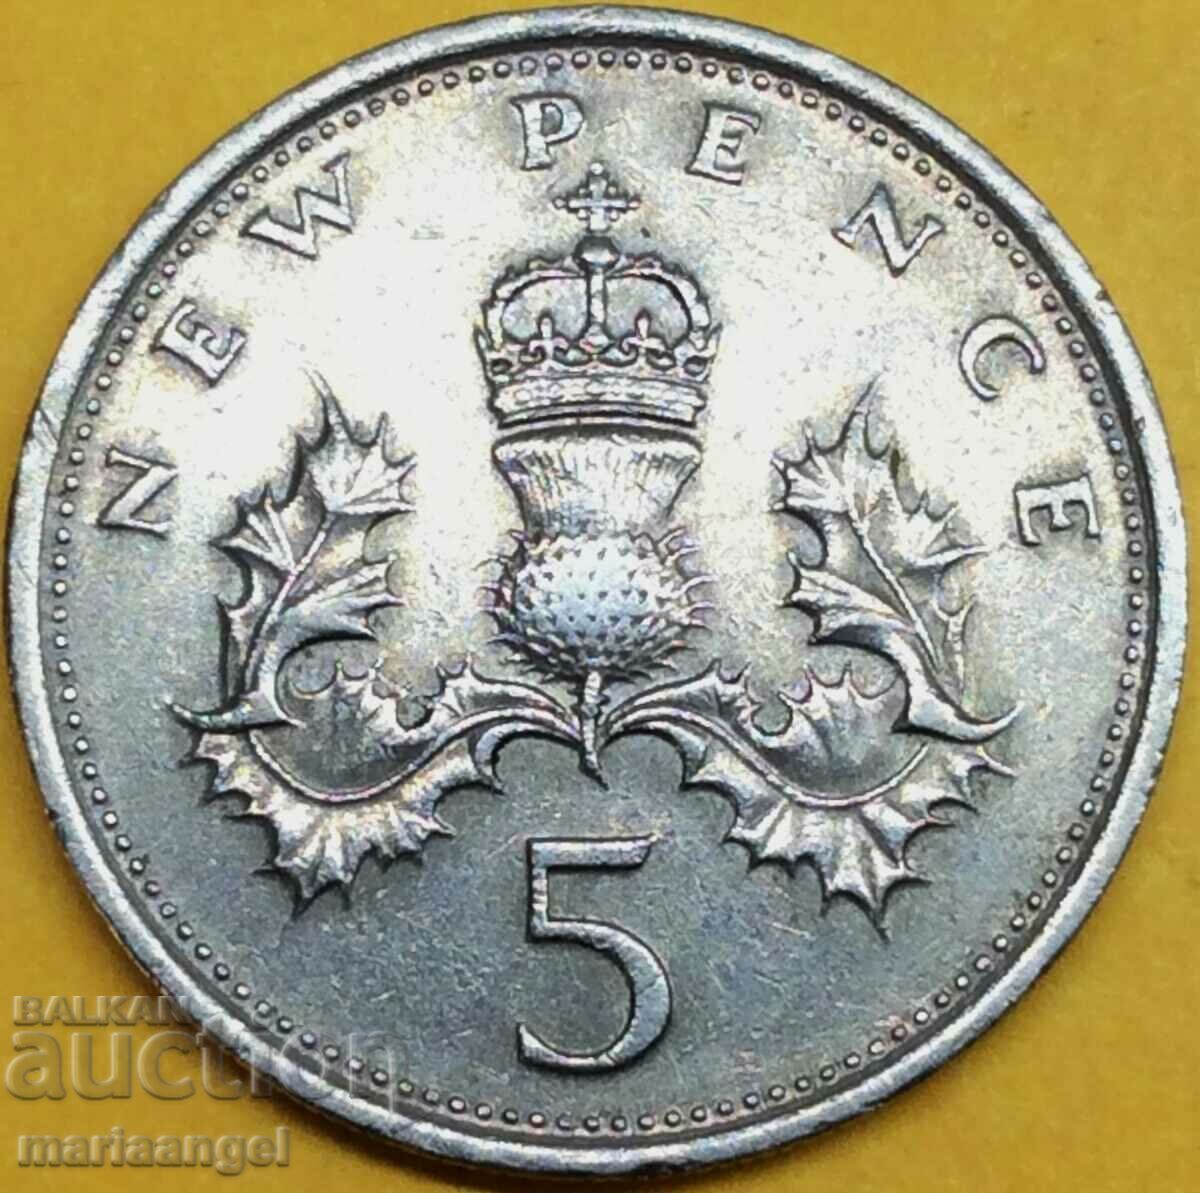 Marea Britanie 1975 5 New Pence